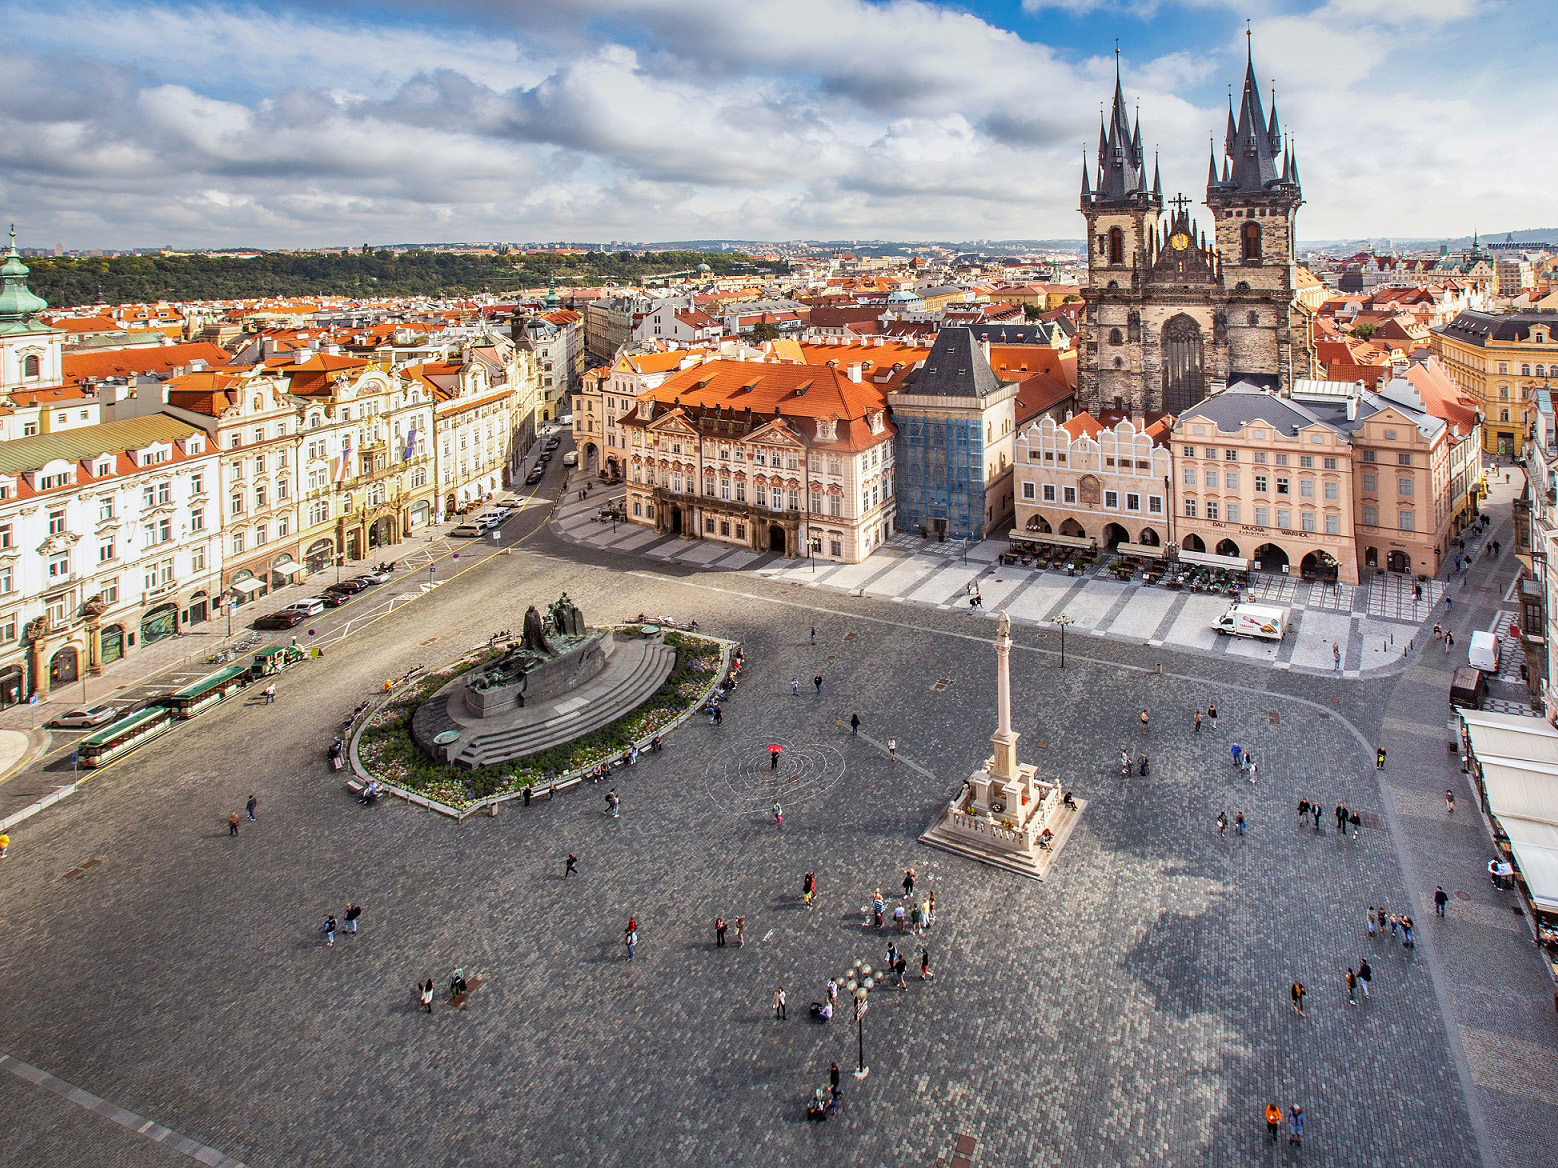 Most popular tourist attractions in Czech Republic - Prague